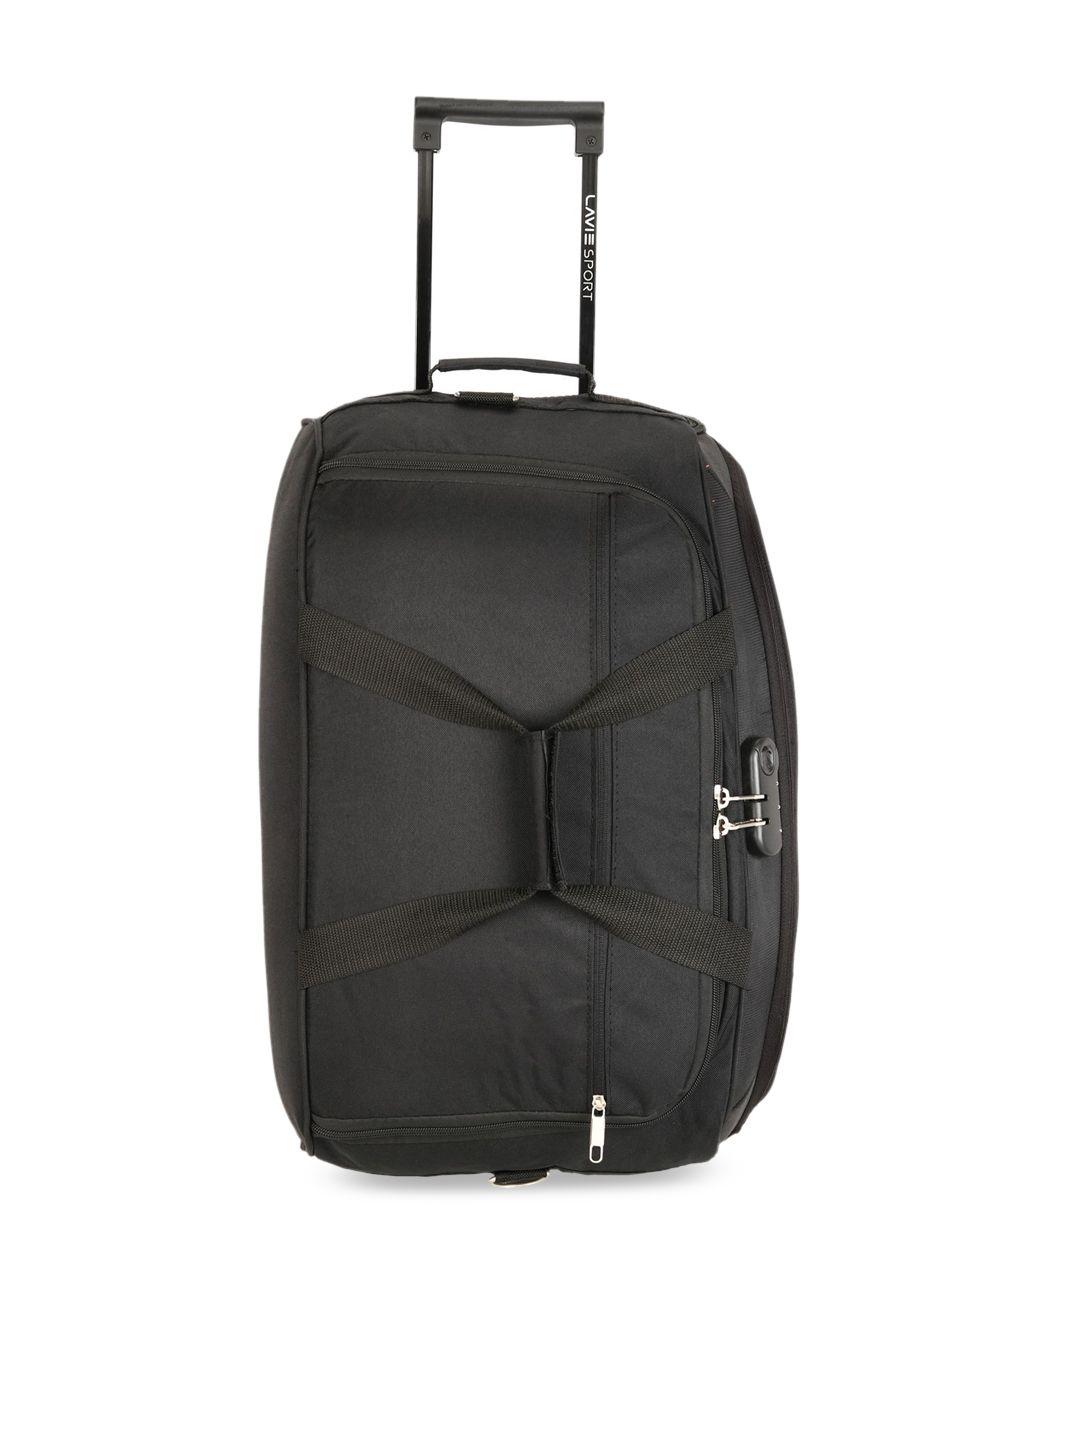 lavie sport anti-theft sage wheel soft sided cabin duffle trolley bag - 57 cm